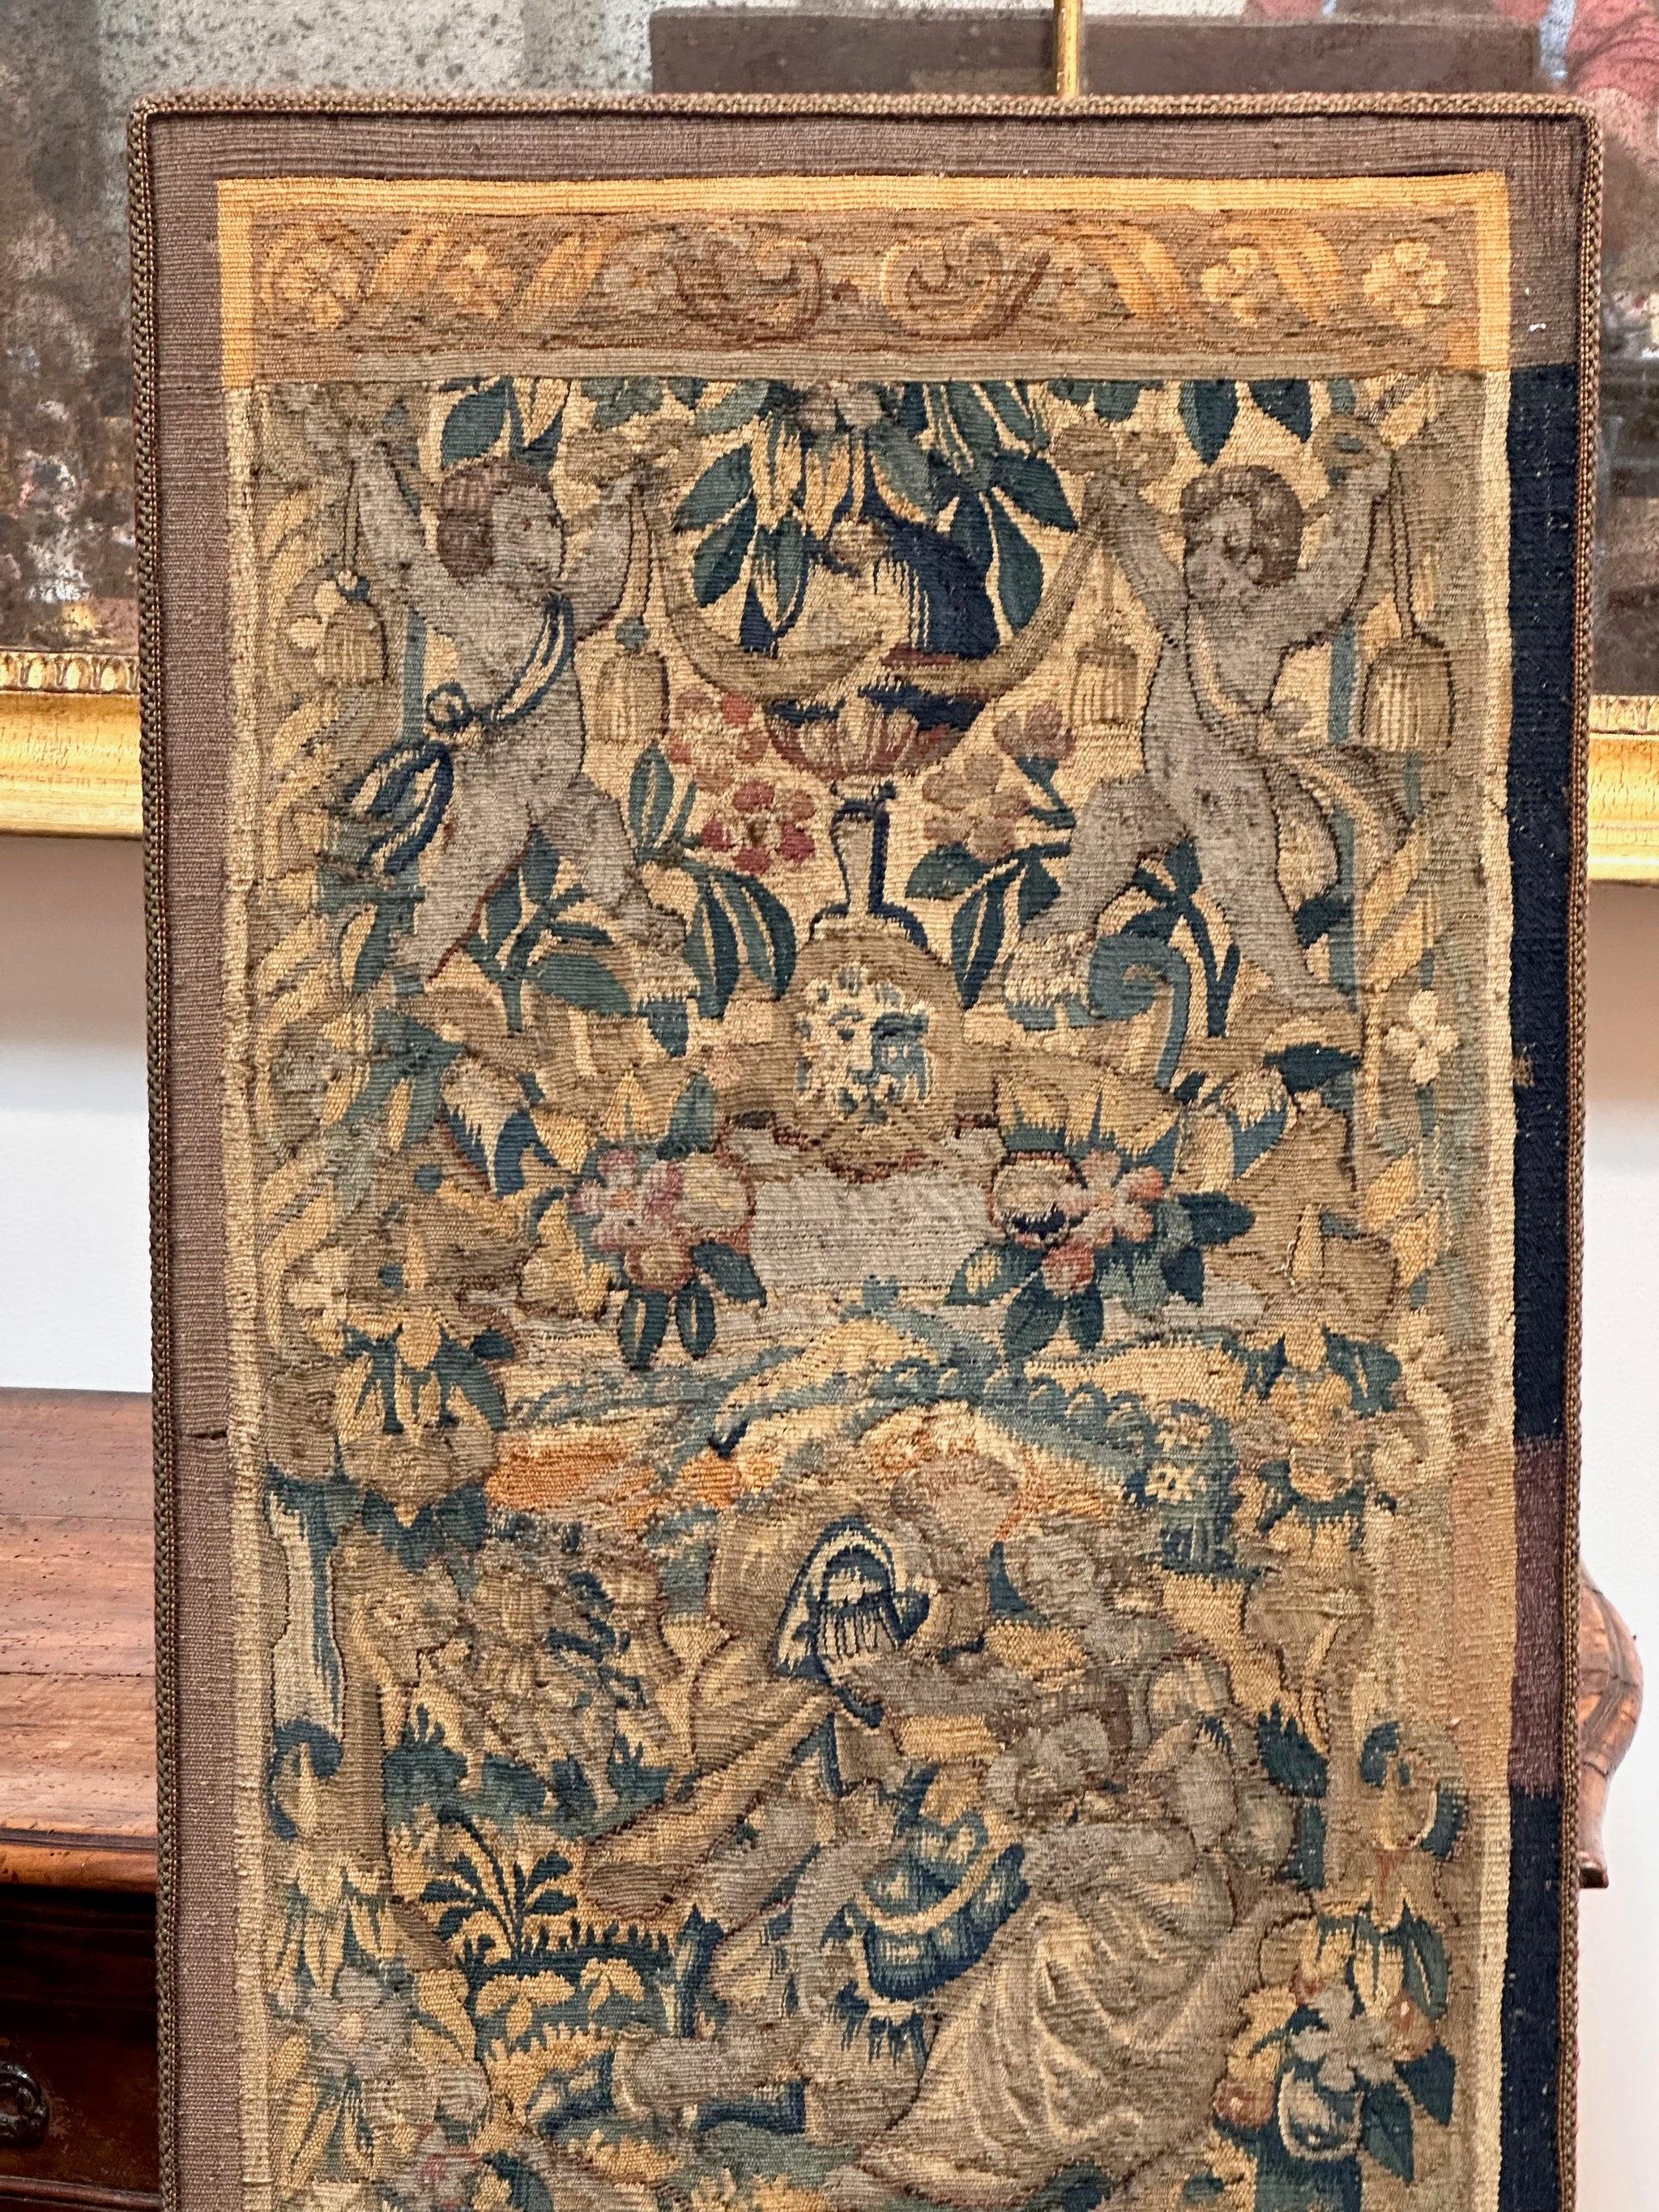 Belgian 17th Century Flemish Tapestry Panel, mounted